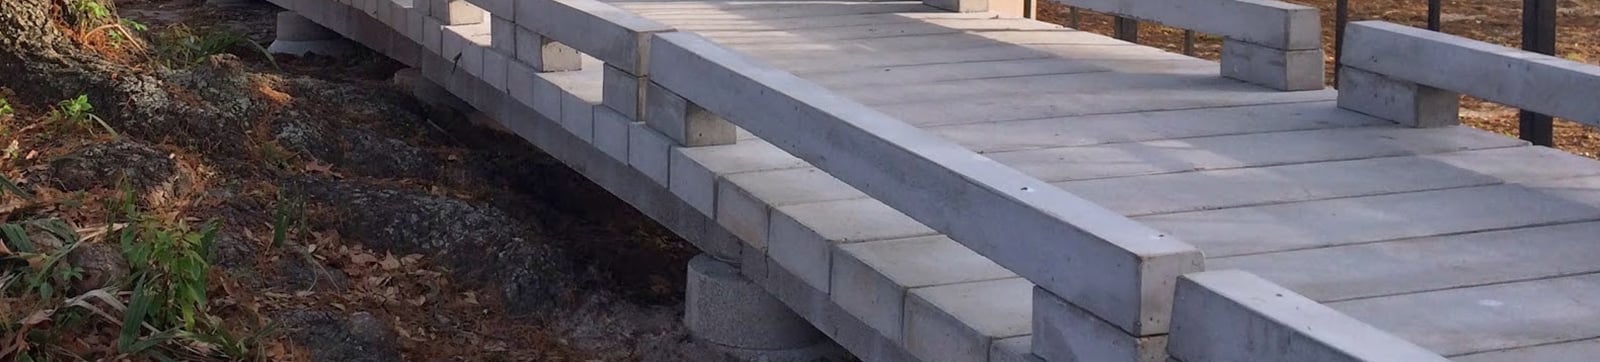 boardwalk-construction-precast-concrete-piers-top.jpg